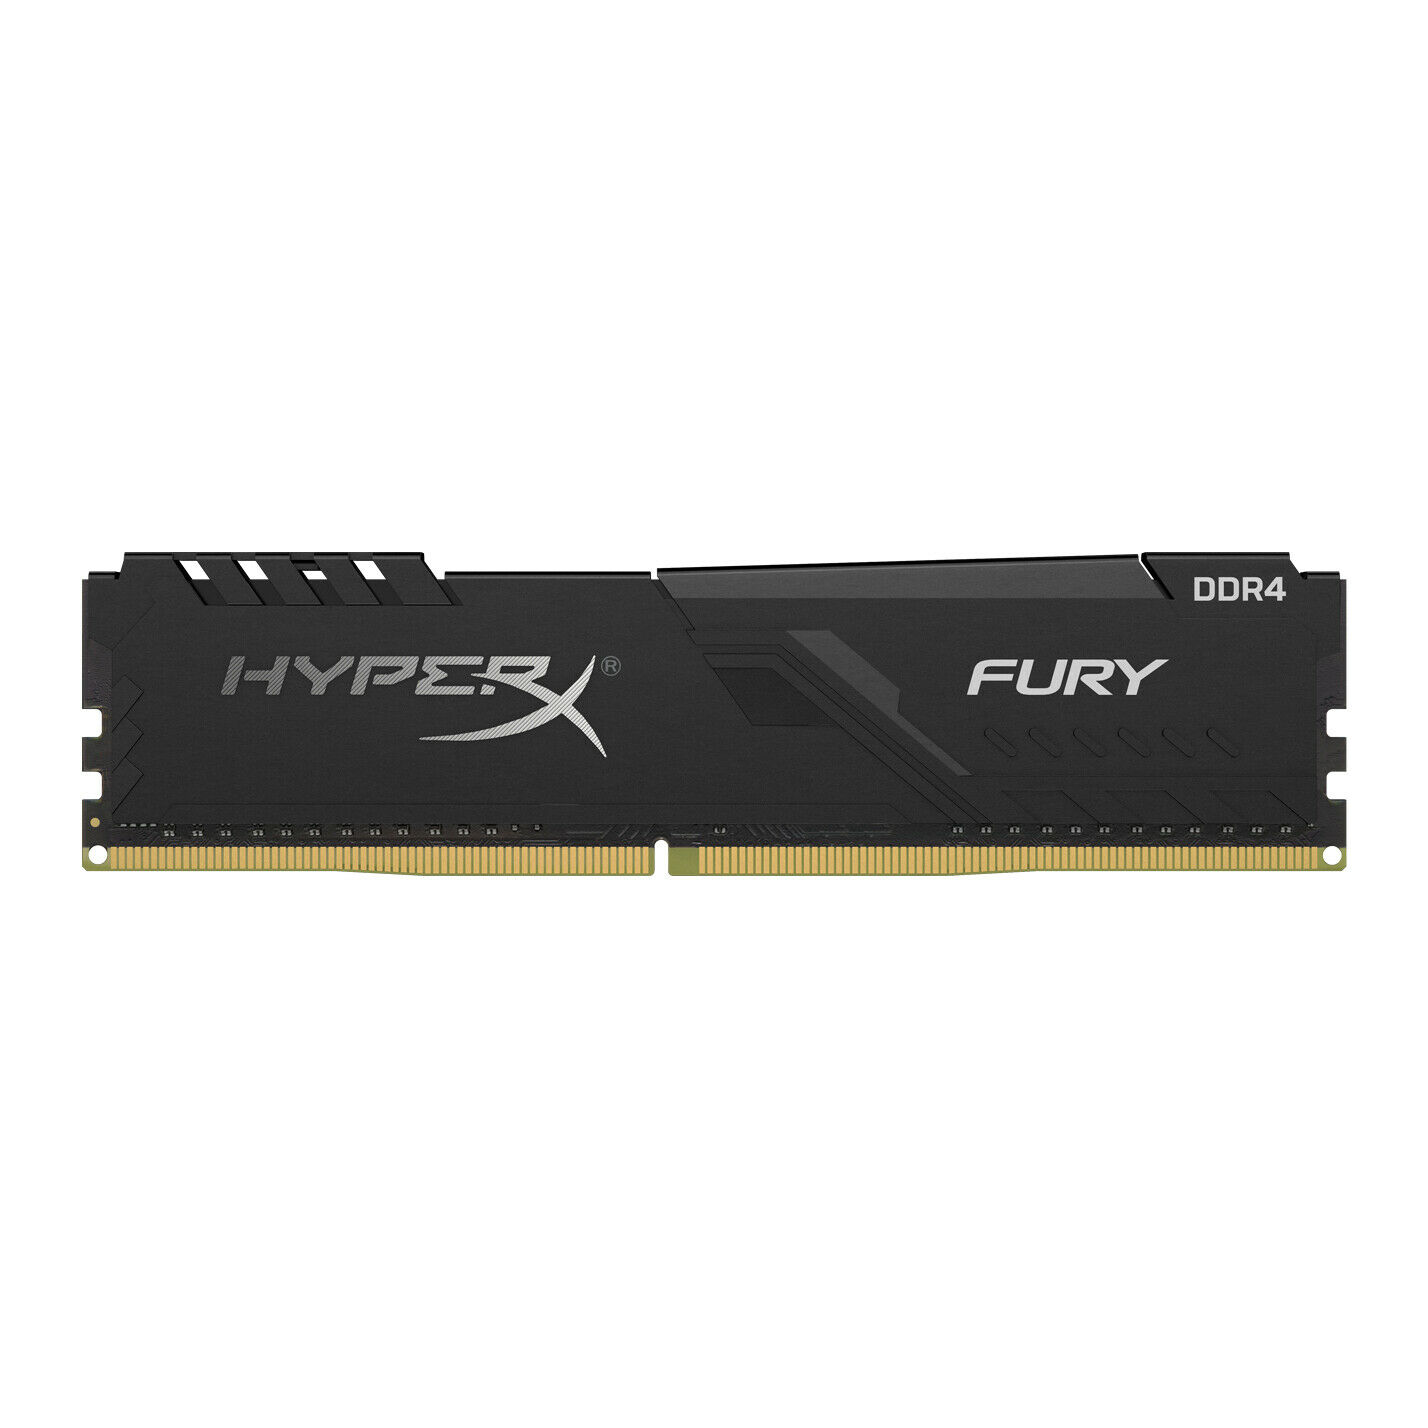 HyperX Fury DDR4, 4GB 3200MHz PC4-25600 CL16 Memory Module